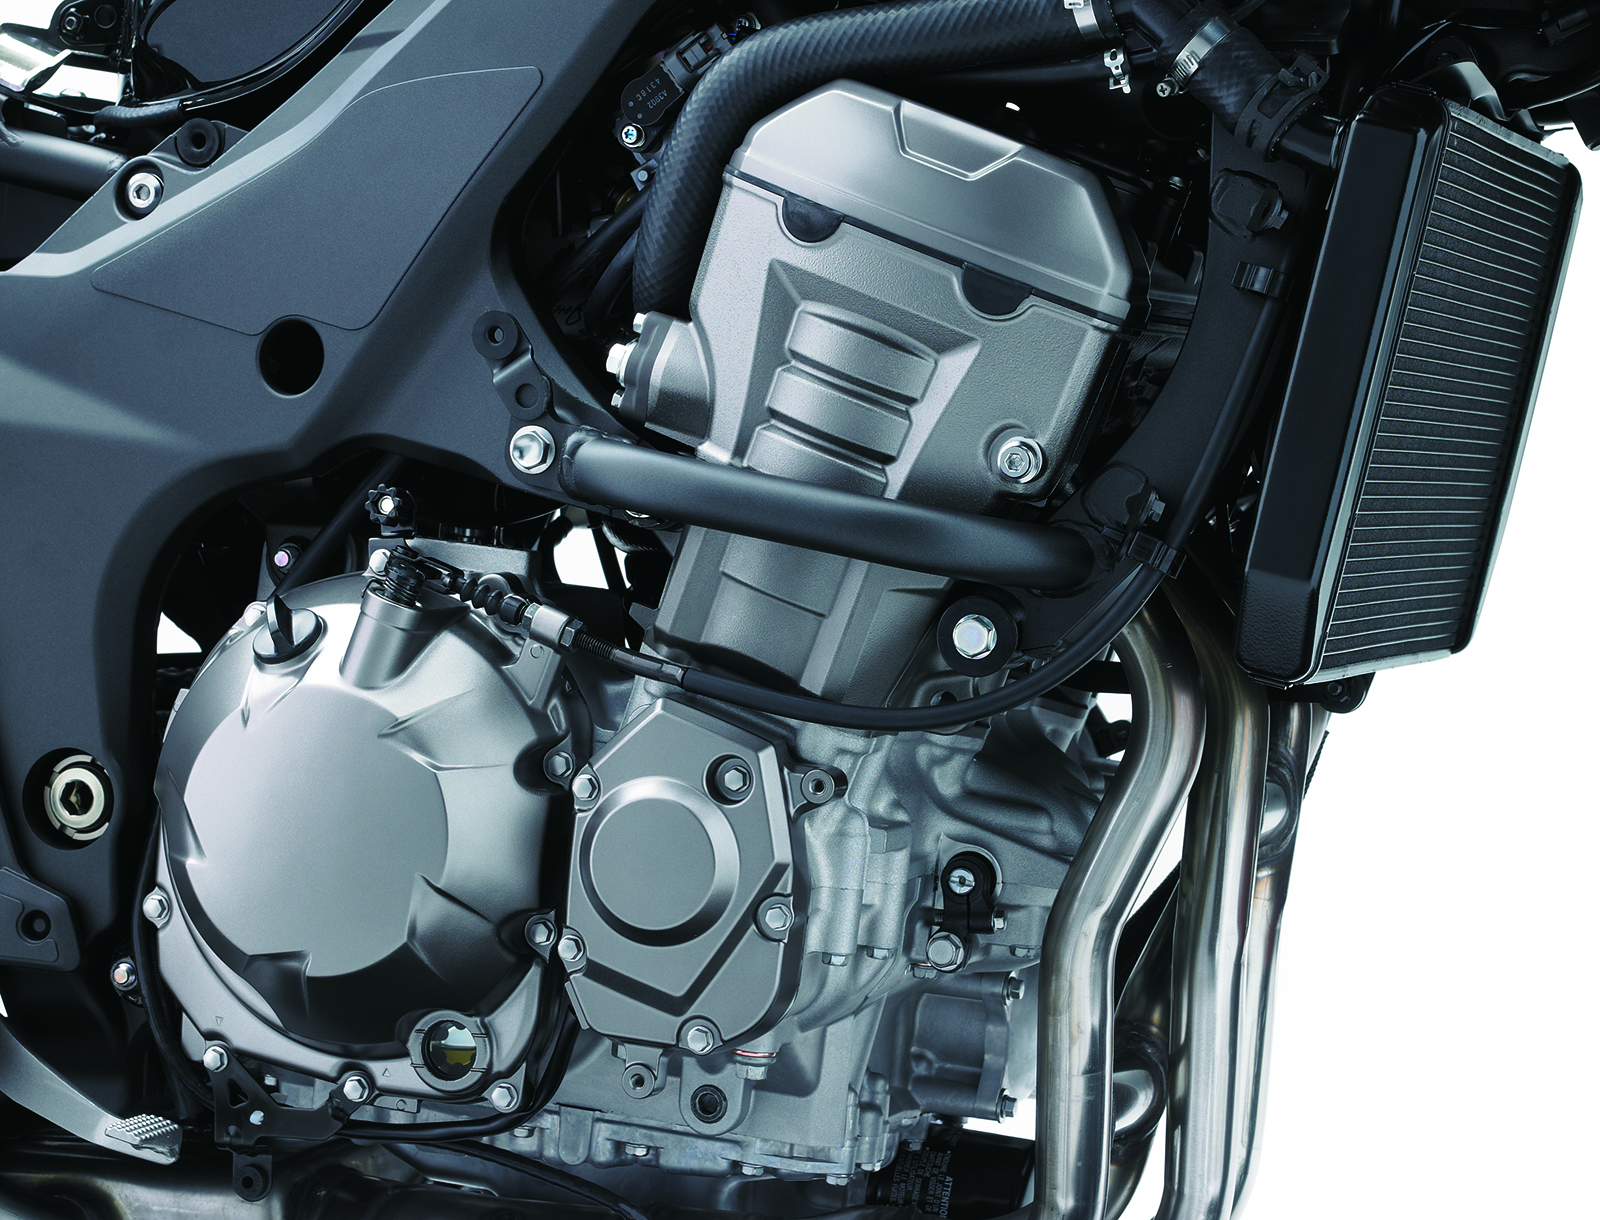 Intermot 2014: new Kawasaki Versys 1000 unveiled